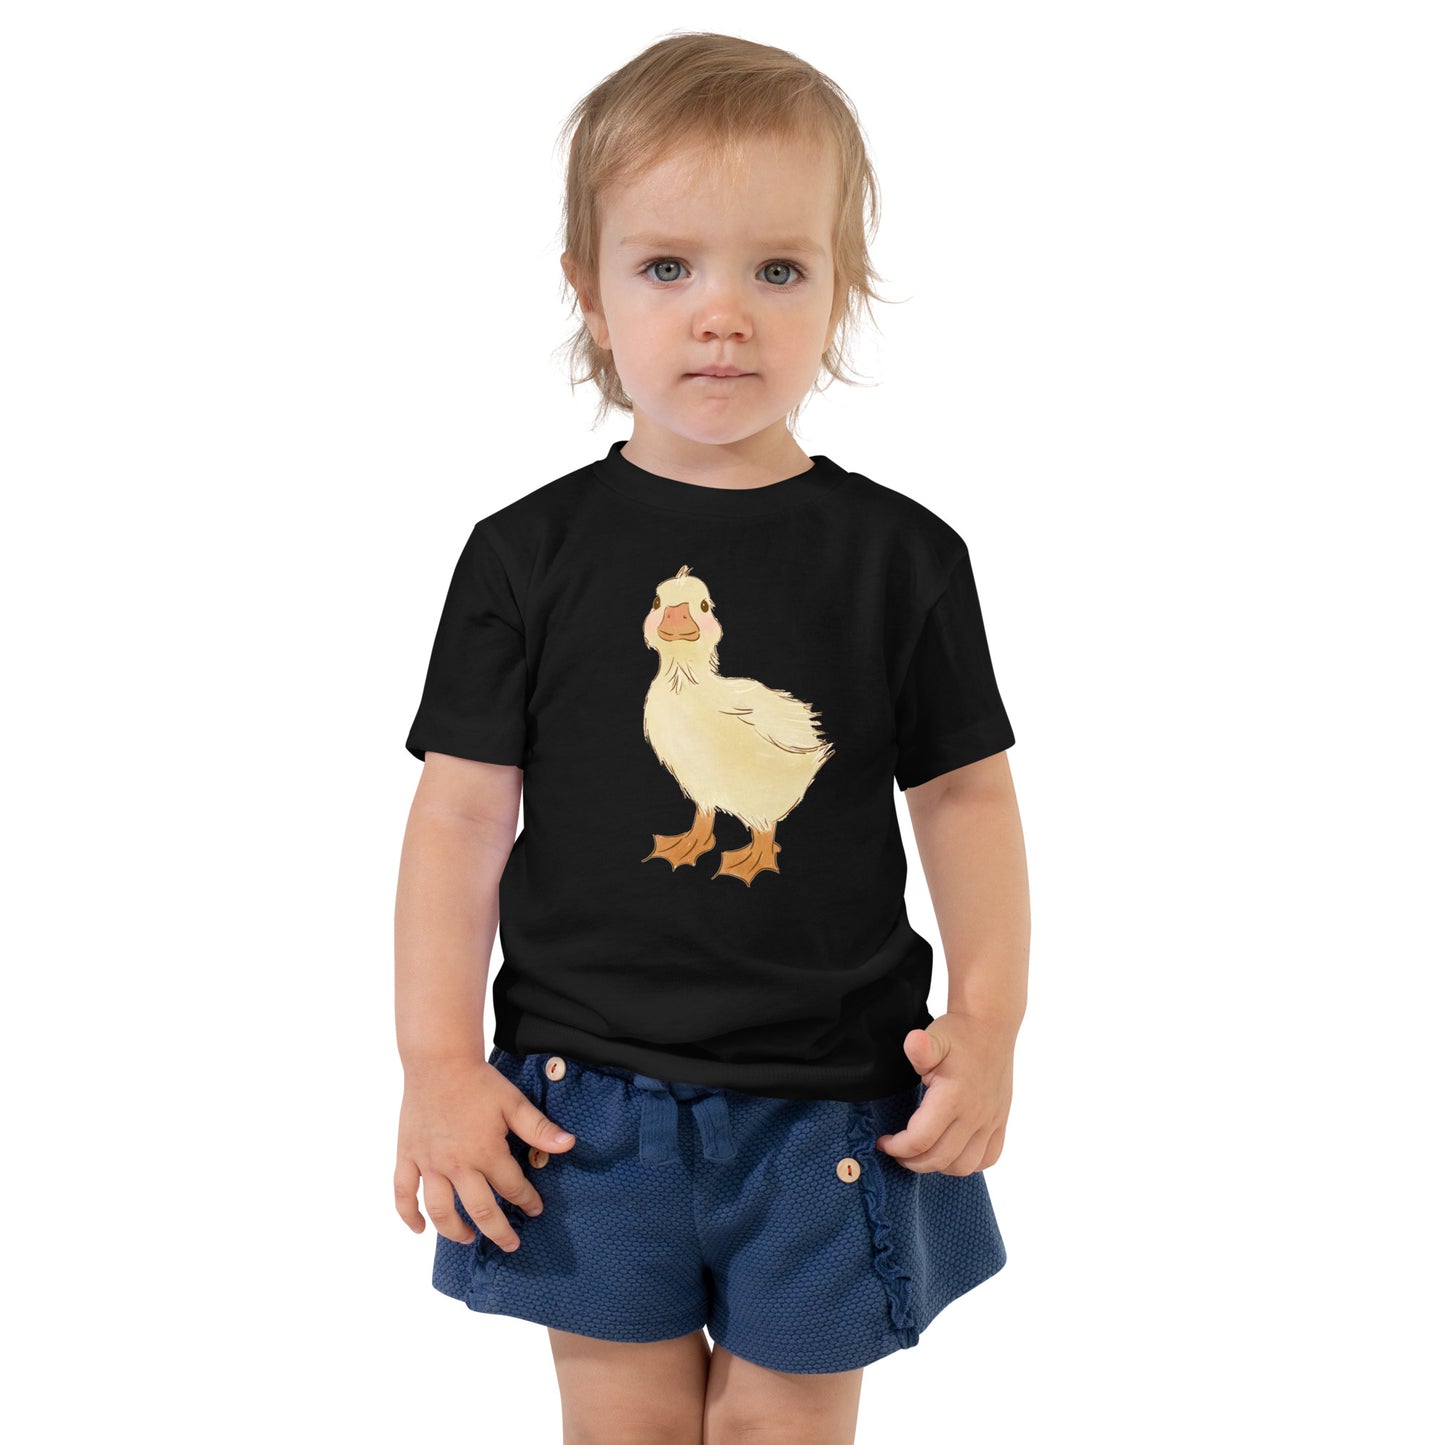 Duckling : Toddler Tee